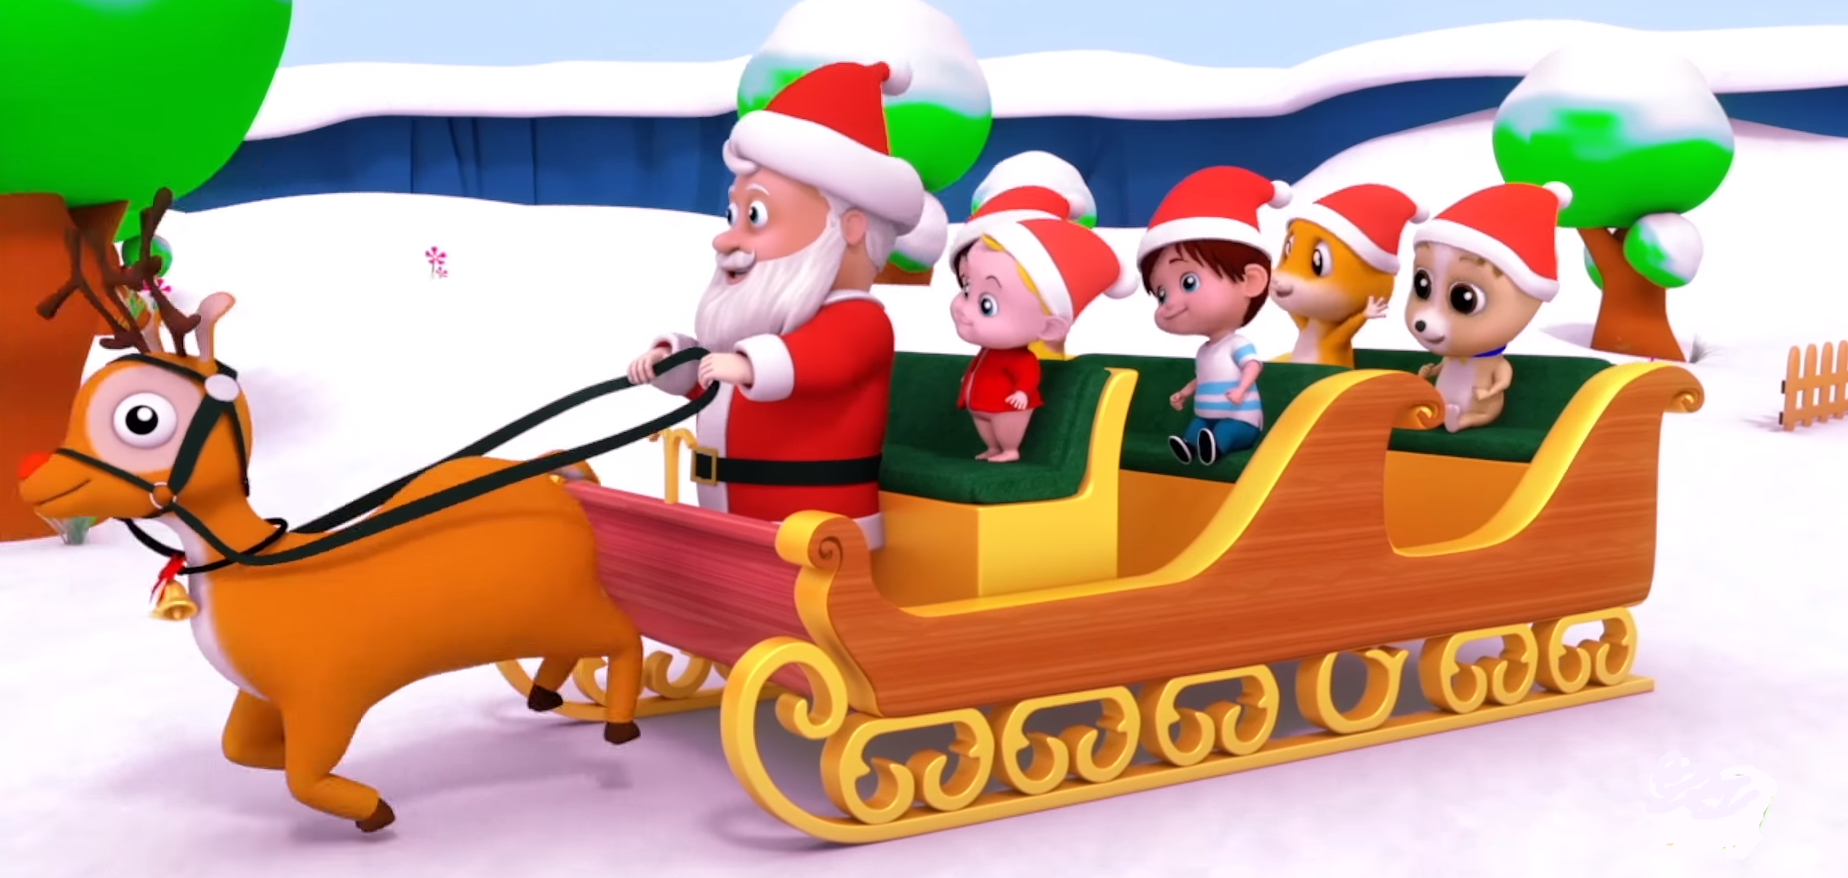 Get kids grooving with these 5 preschooler Christmas songs